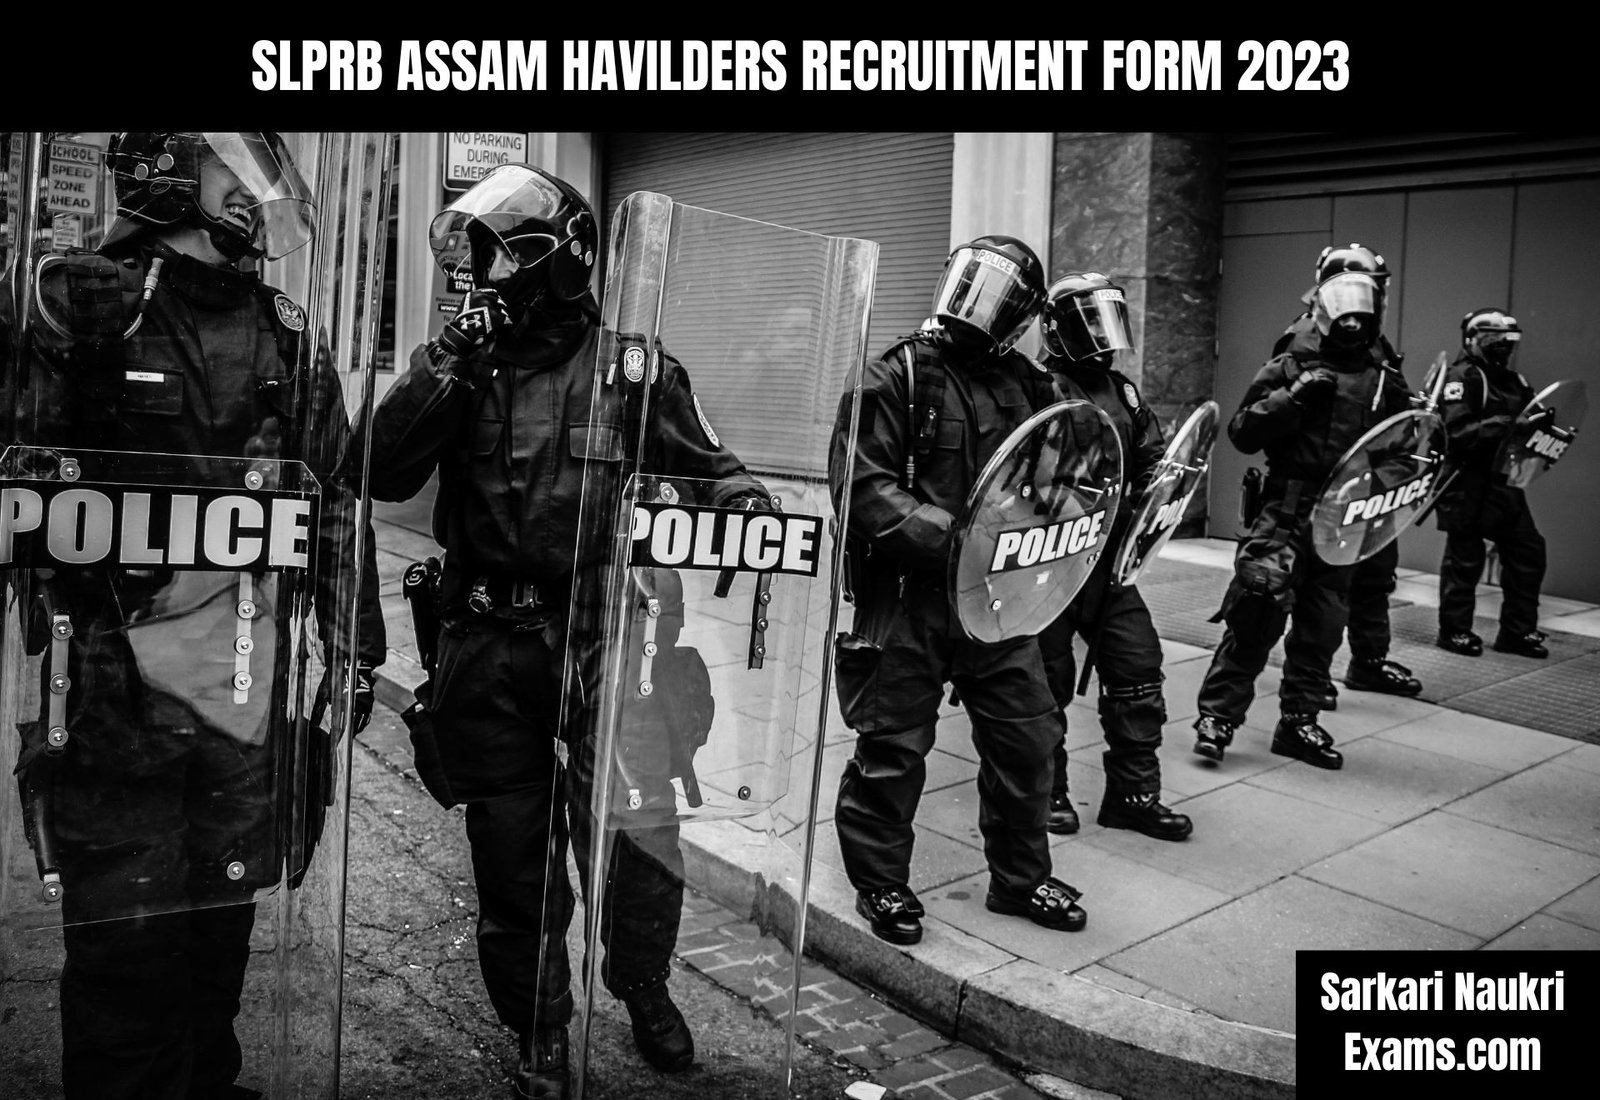 SLPRB Assam Havilders Recruitment Form 2023